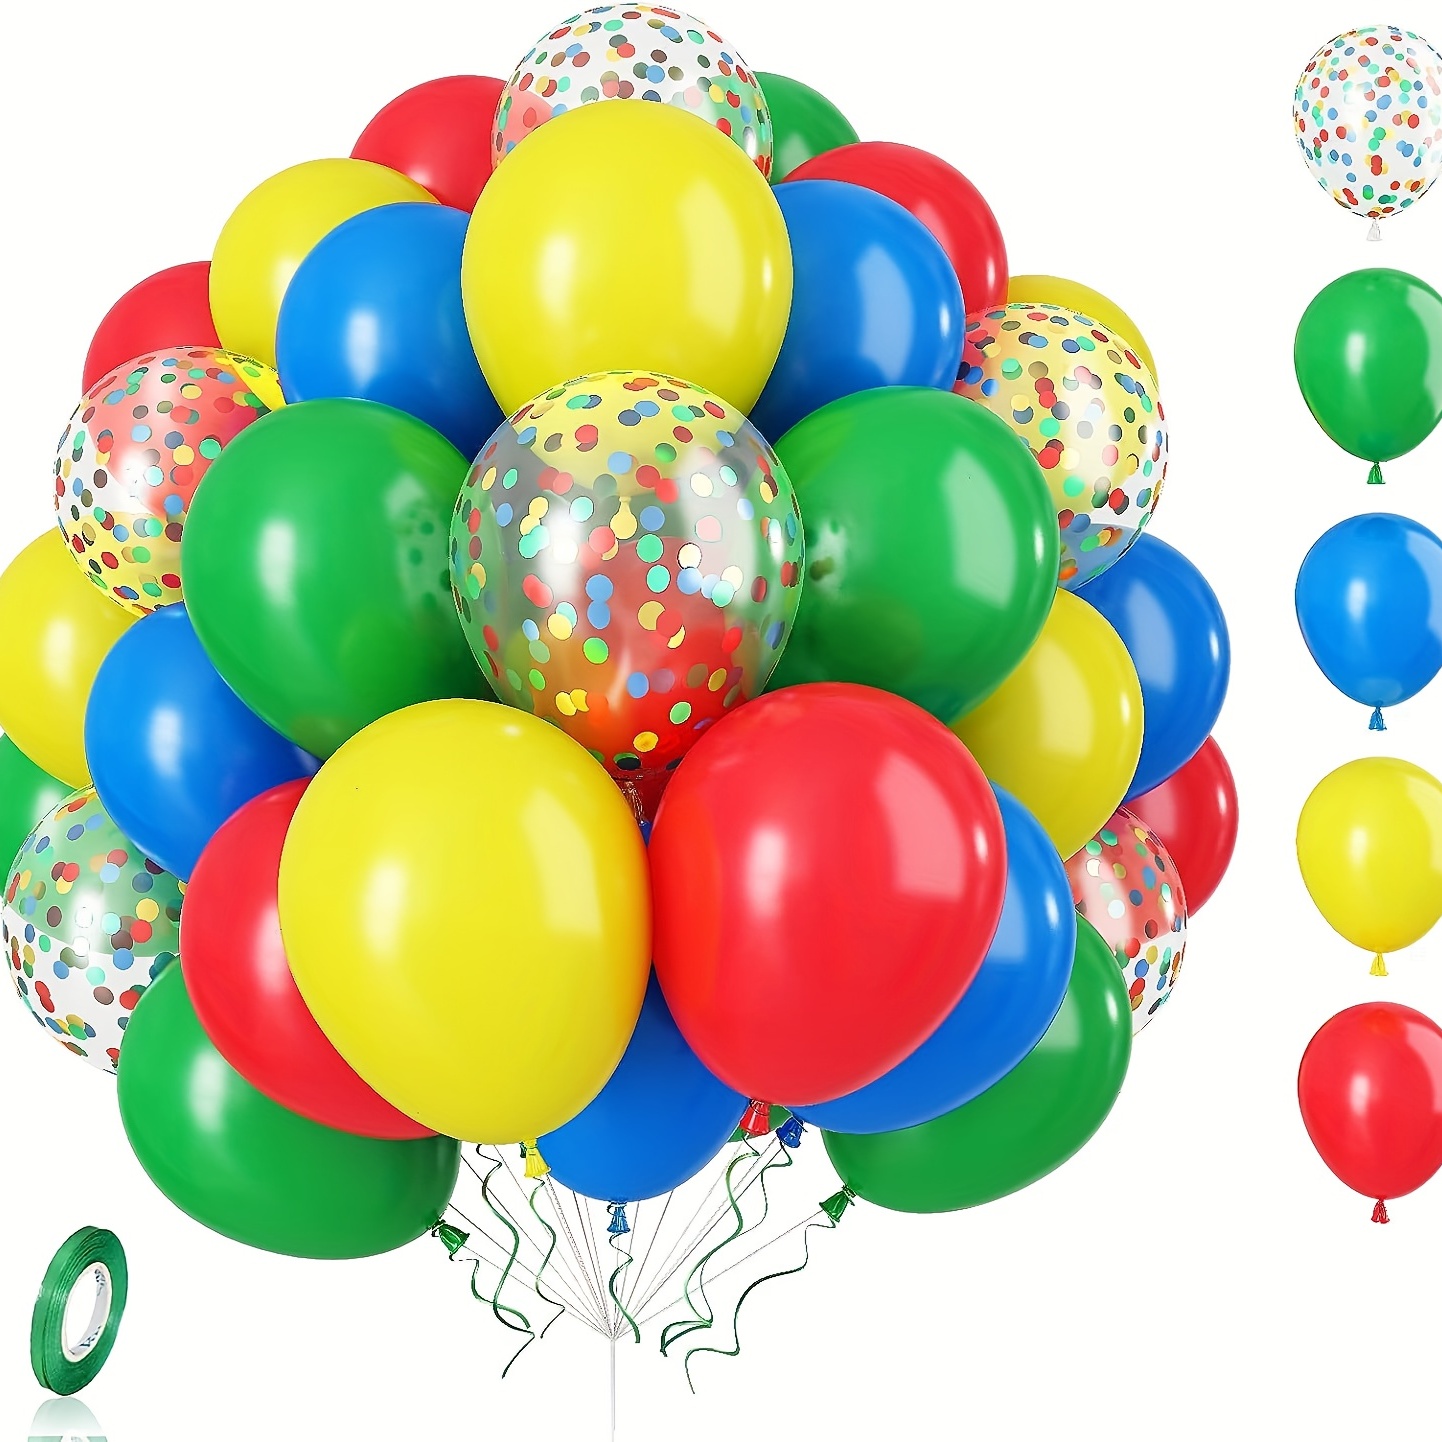 100 globos verdes, globos de látex verde de 12 pulgadas, calidad